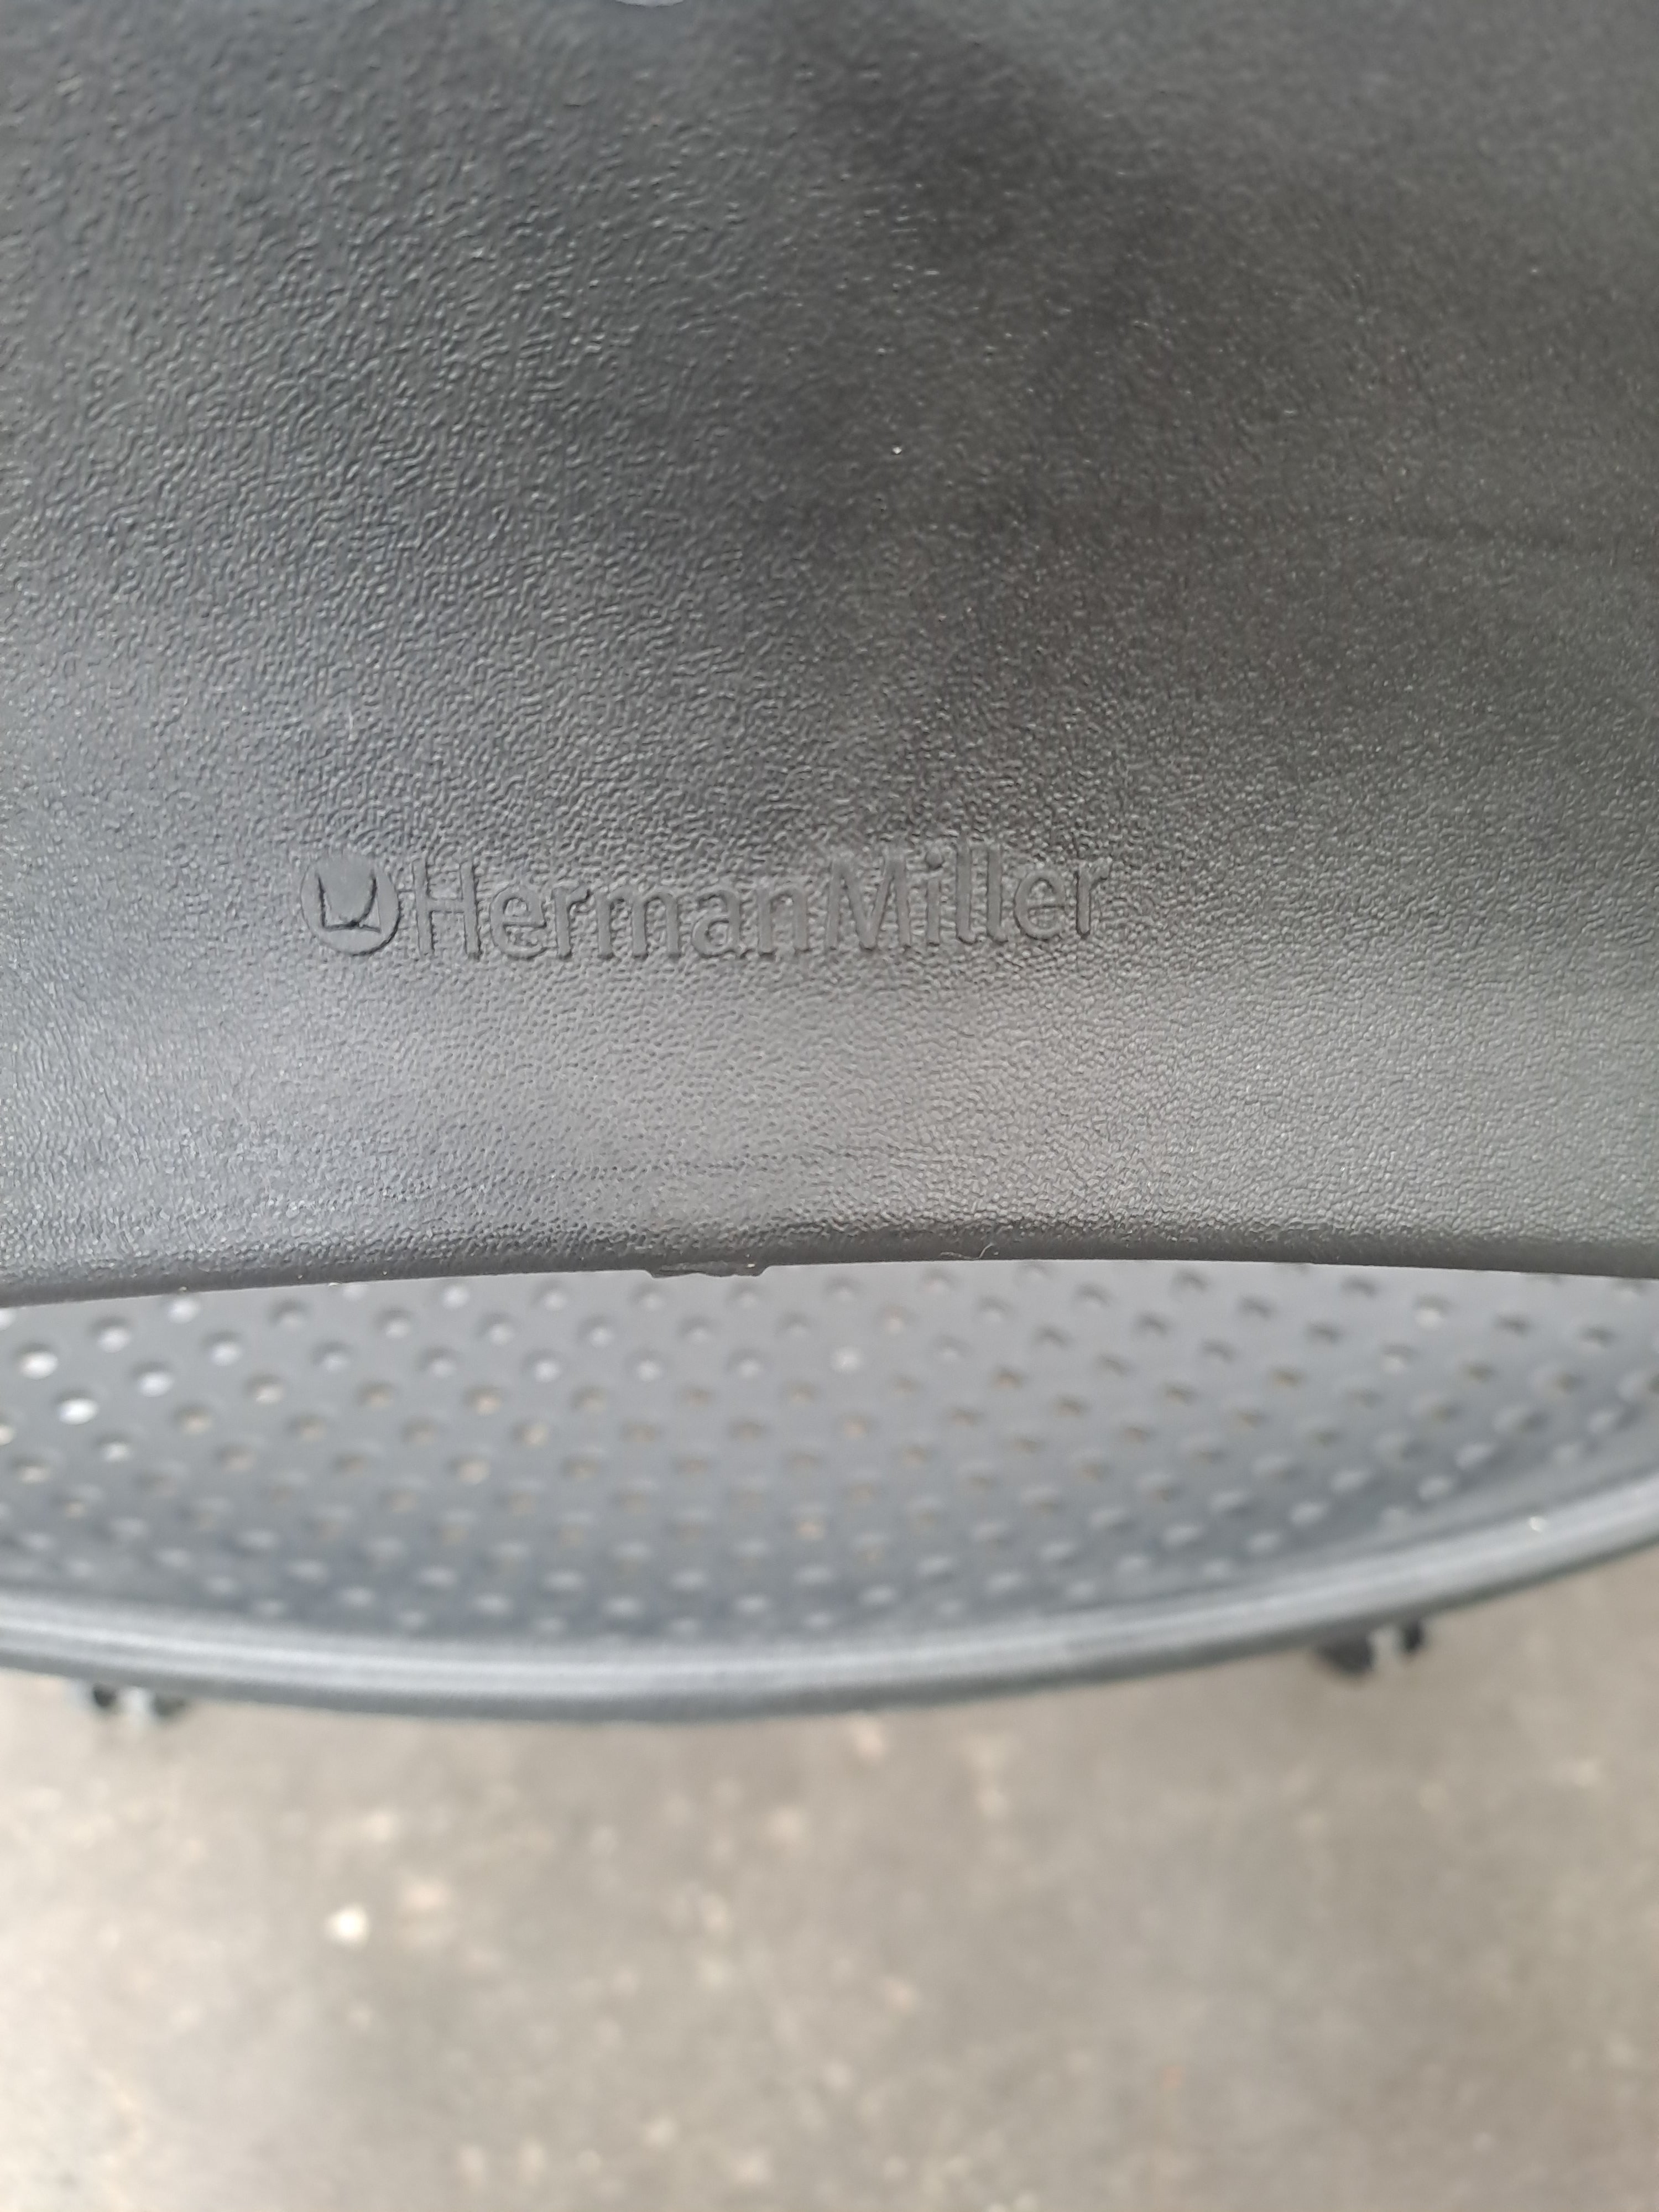 Herman Miller Caper Chair